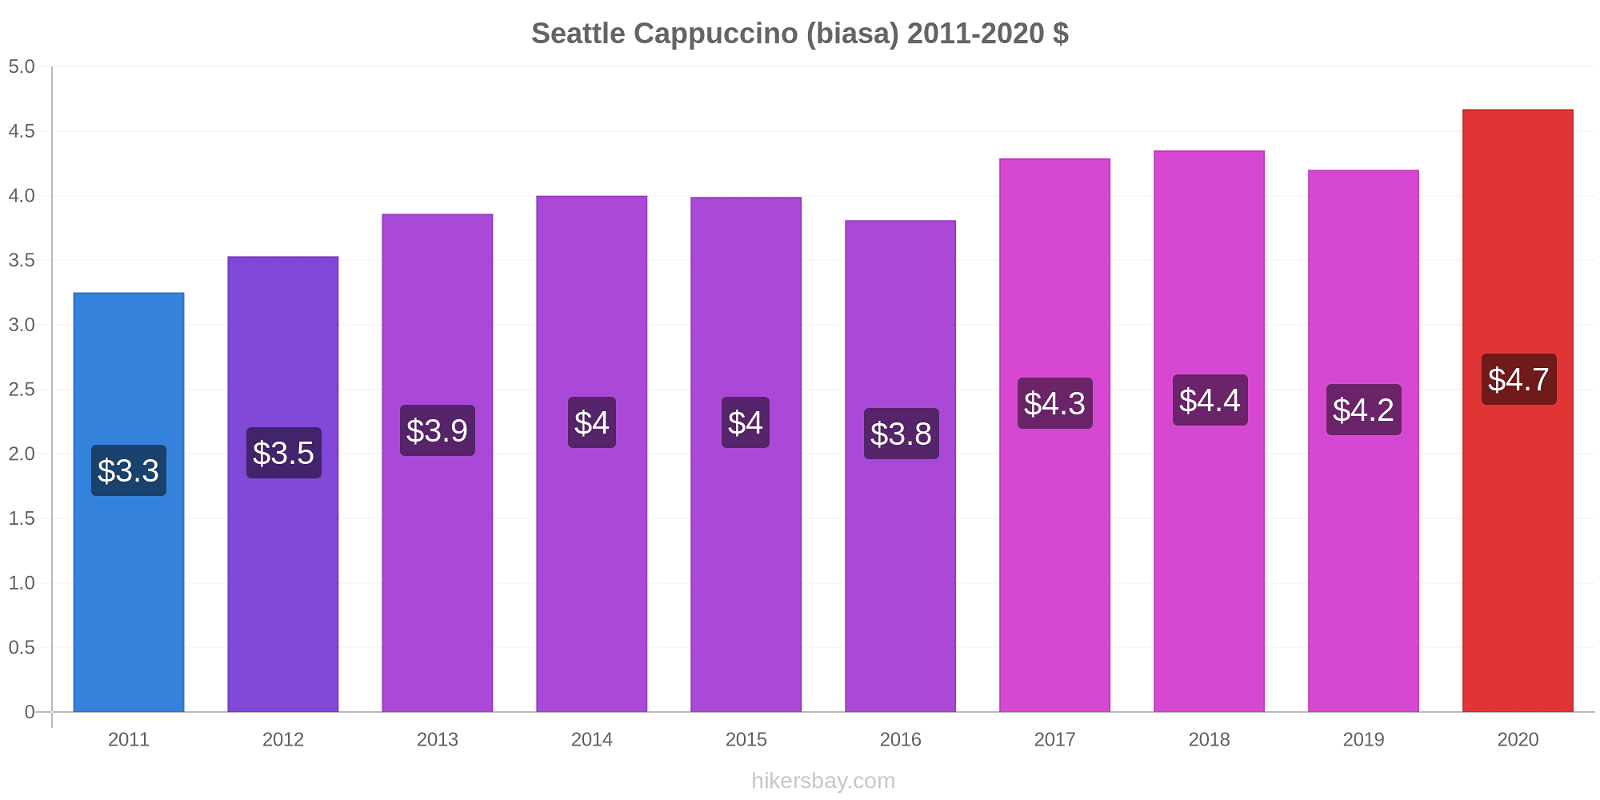 Seattle perubahan harga Cappuccino (biasa) hikersbay.com